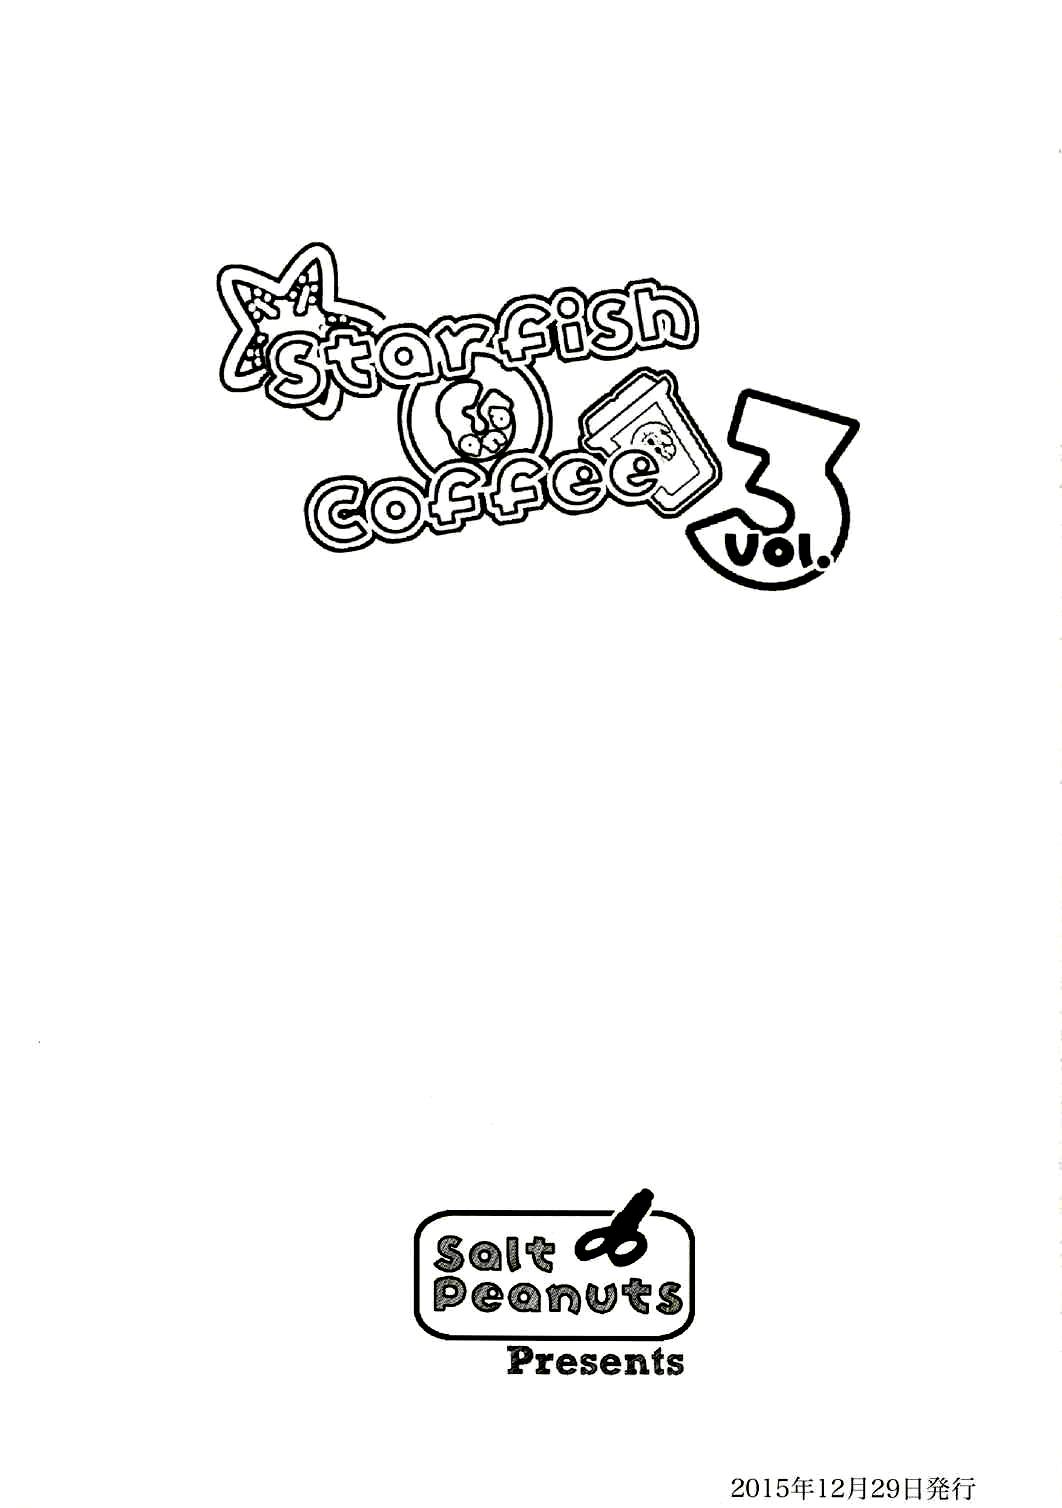 Sixtynine Starfish and Coffee Vol. 3 - Nichijou Love Making - Page 4